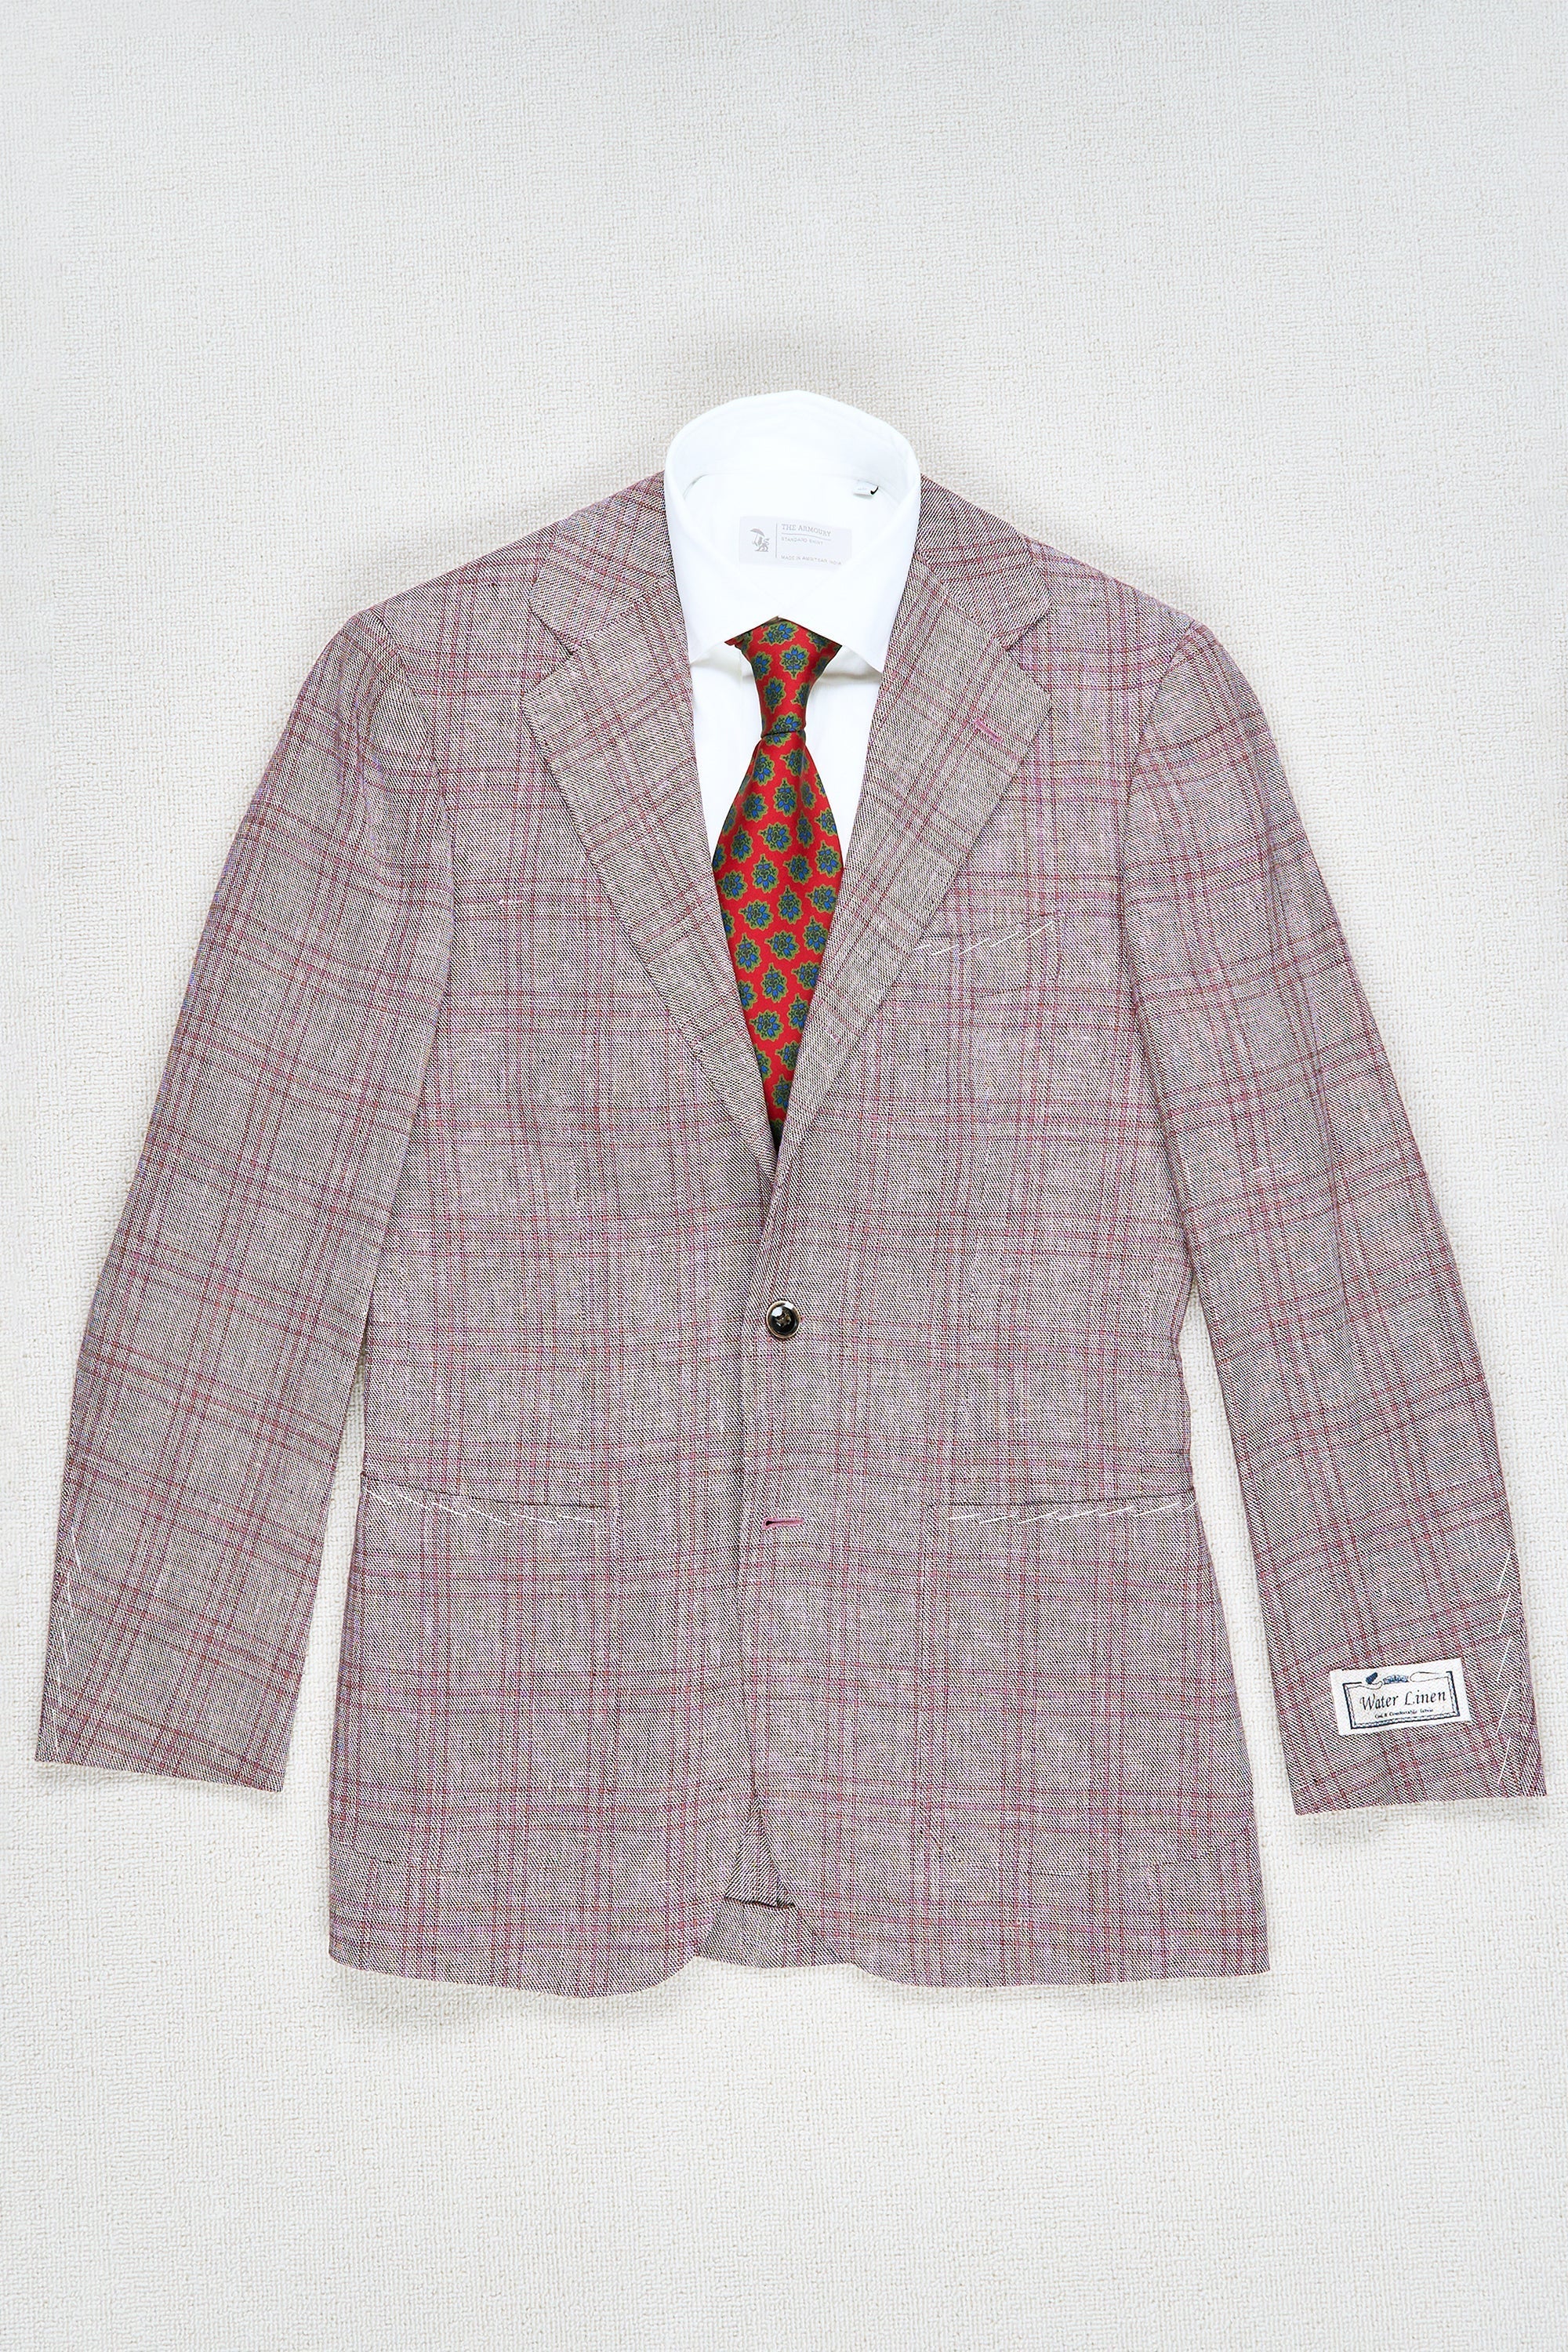 Ring Jacket AMJ01 Pink Linen Check Sport Coat